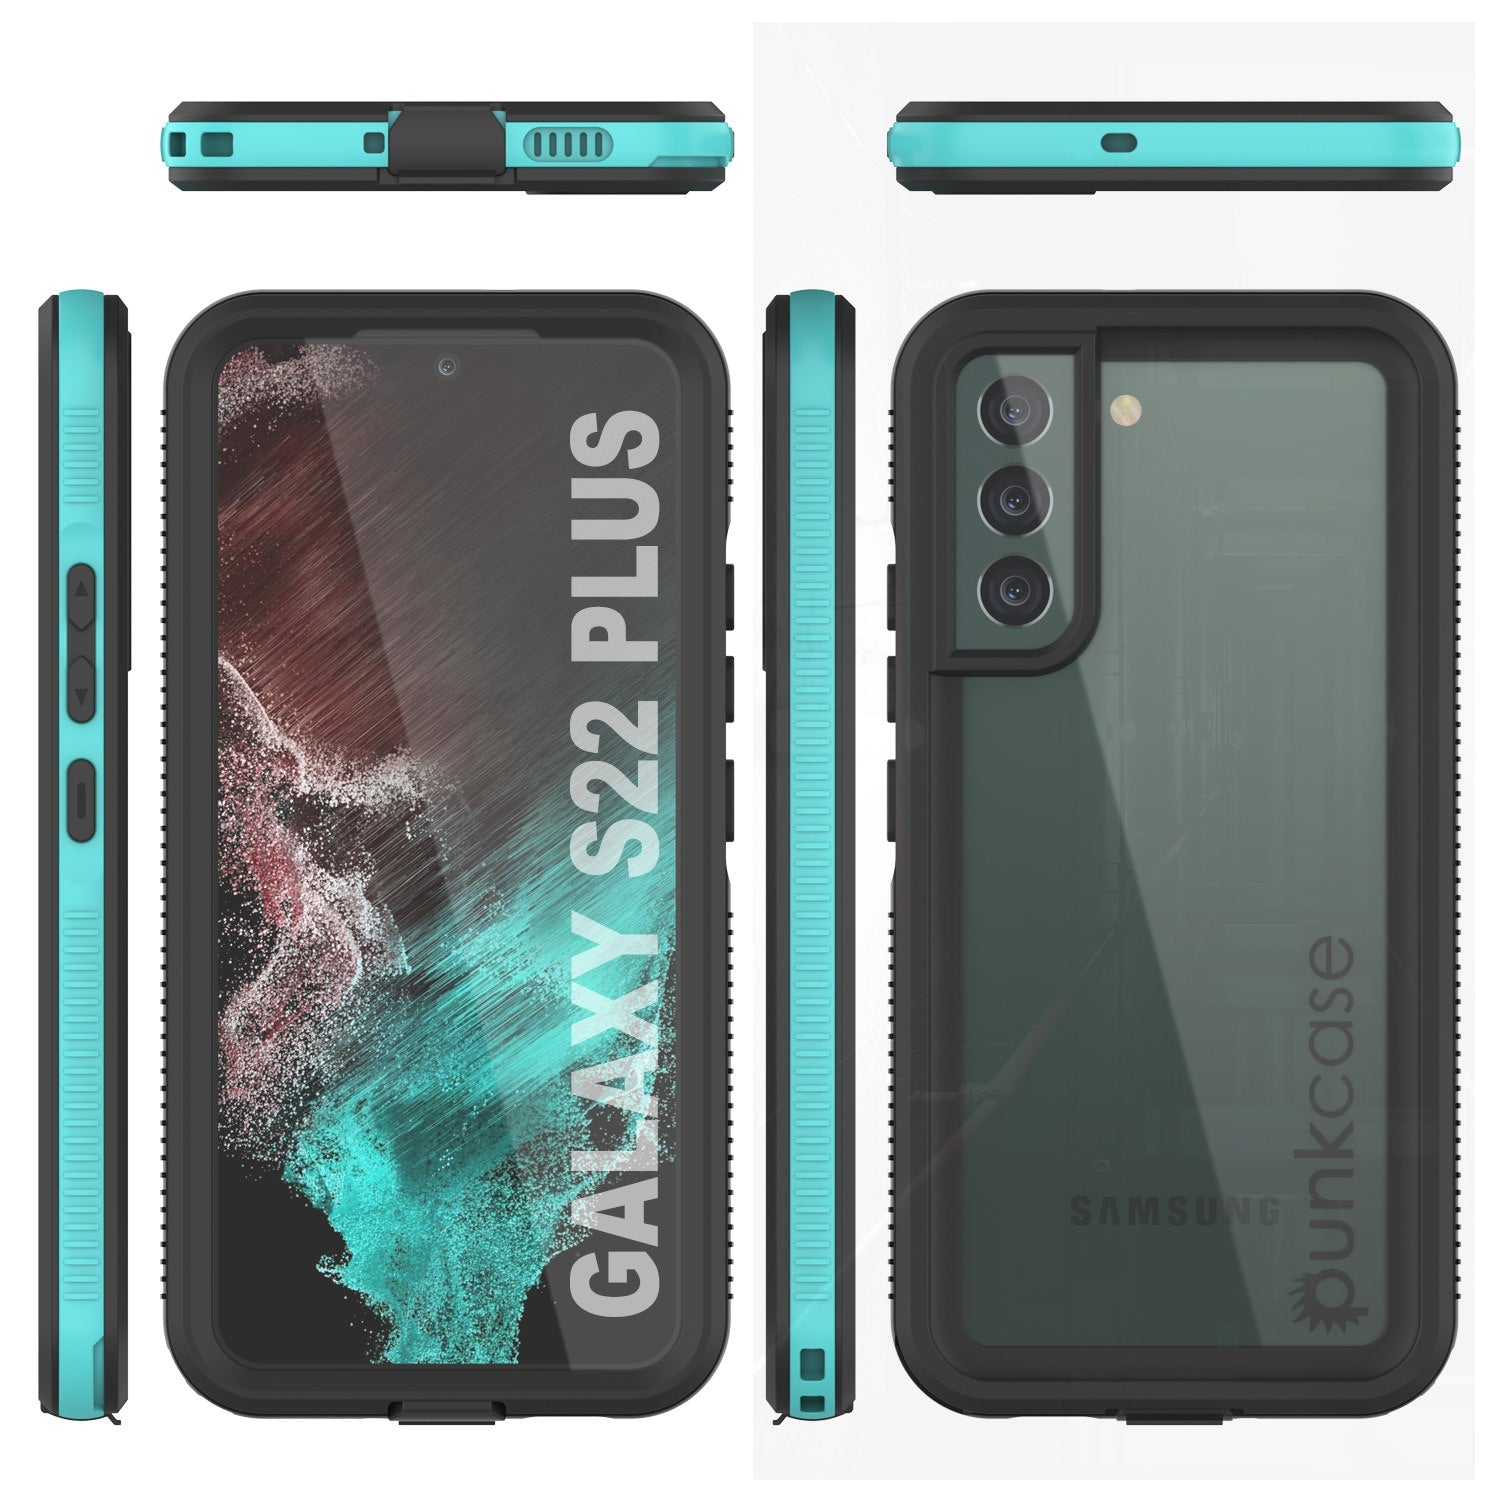 Galaxy S22+ Plus Waterproof Case PunkCase Ultimato Teal Thin 6.6ft Underwater IP68 Shock/Snow Proof [Teal]